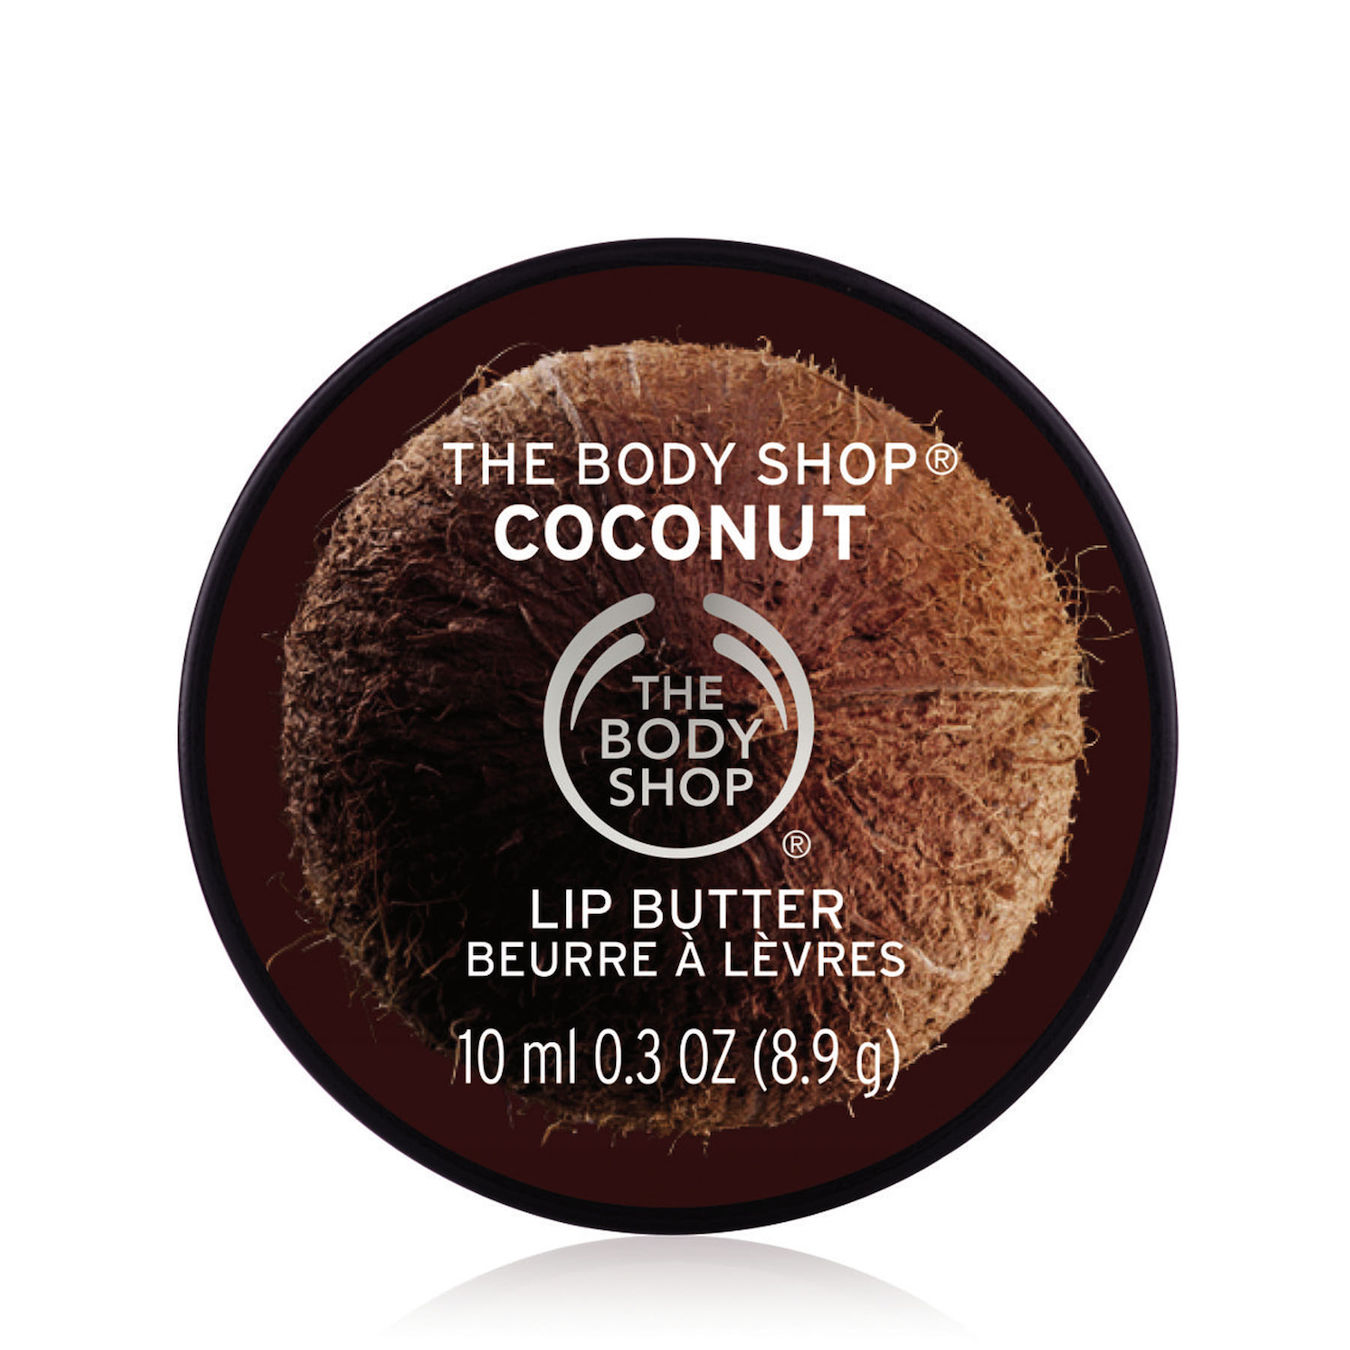 The Body Shop Coconut Lip Butter von The Body Shop